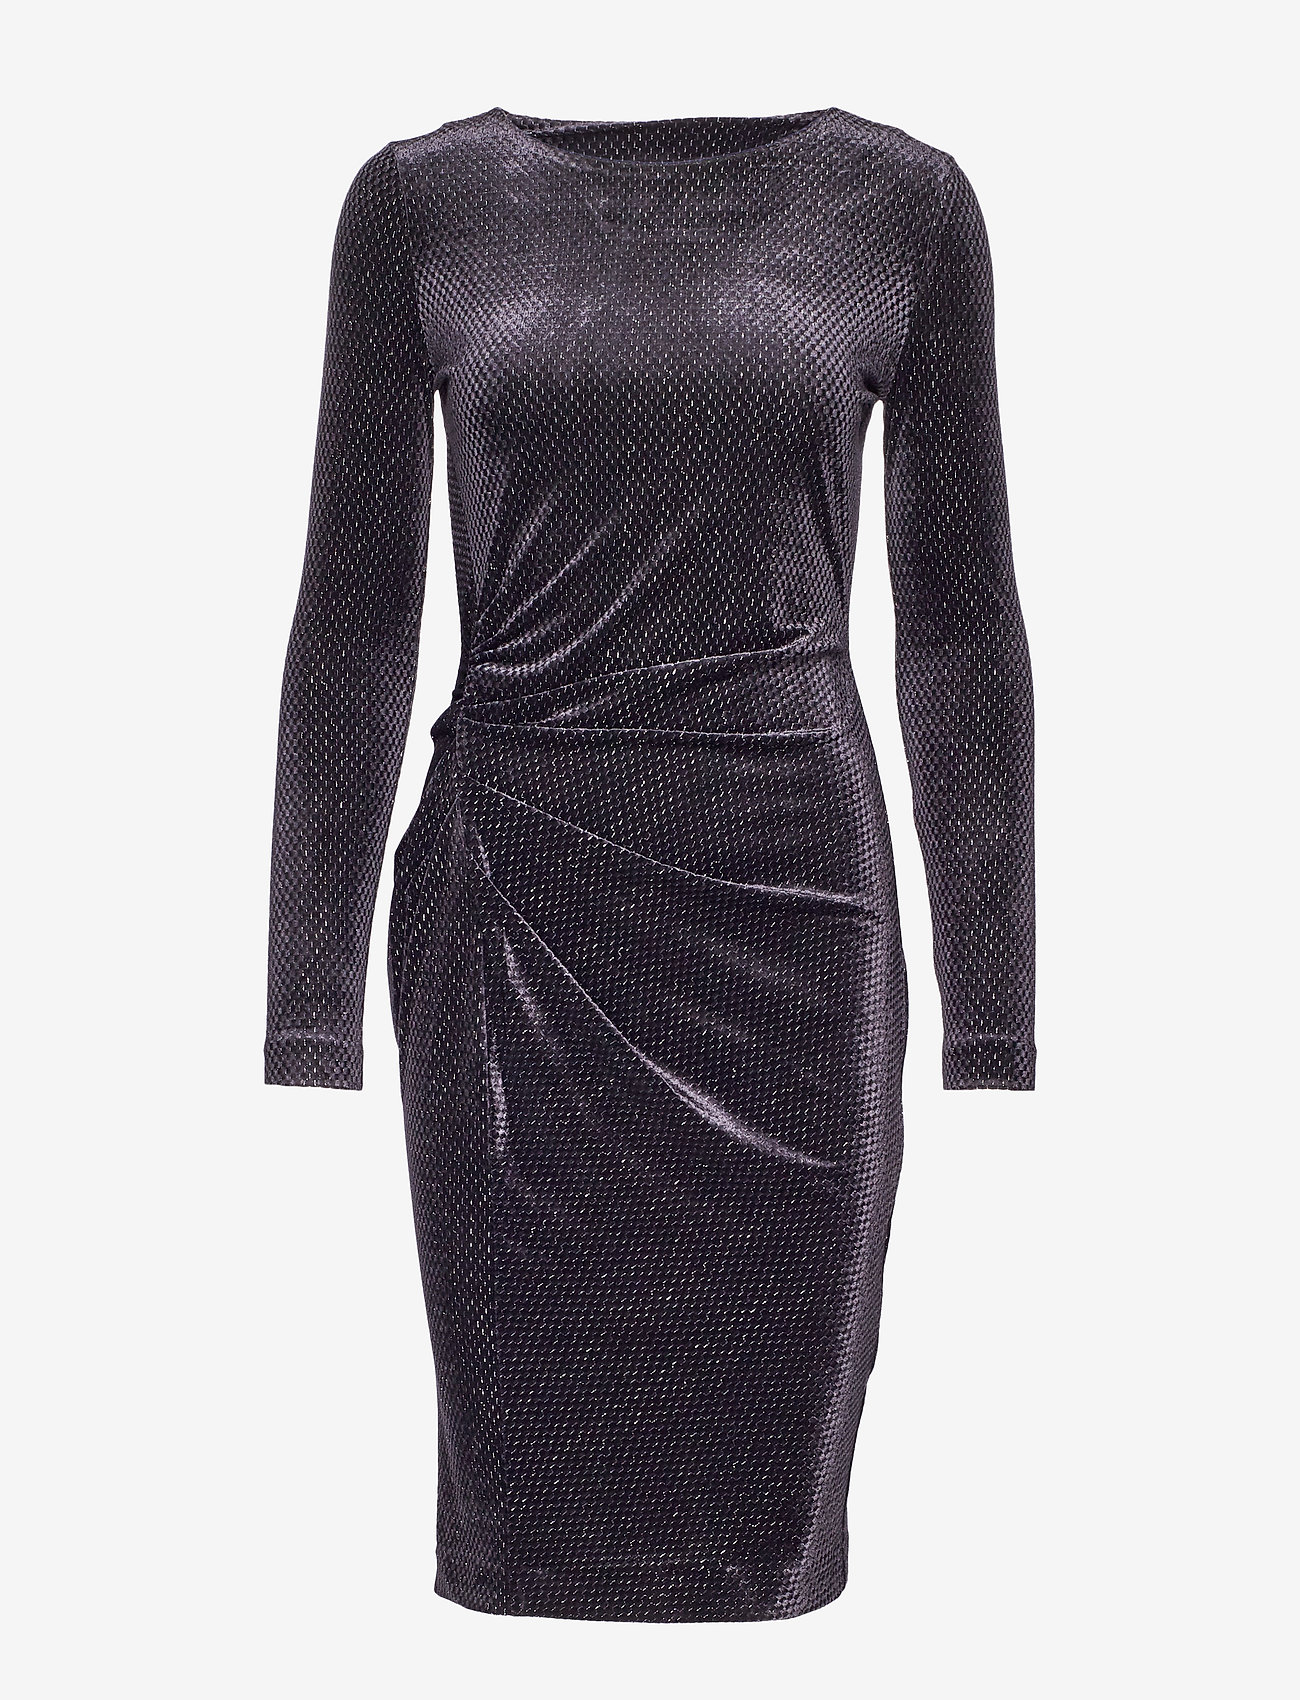 InWear - OnoIW Drape Dress - black - 0